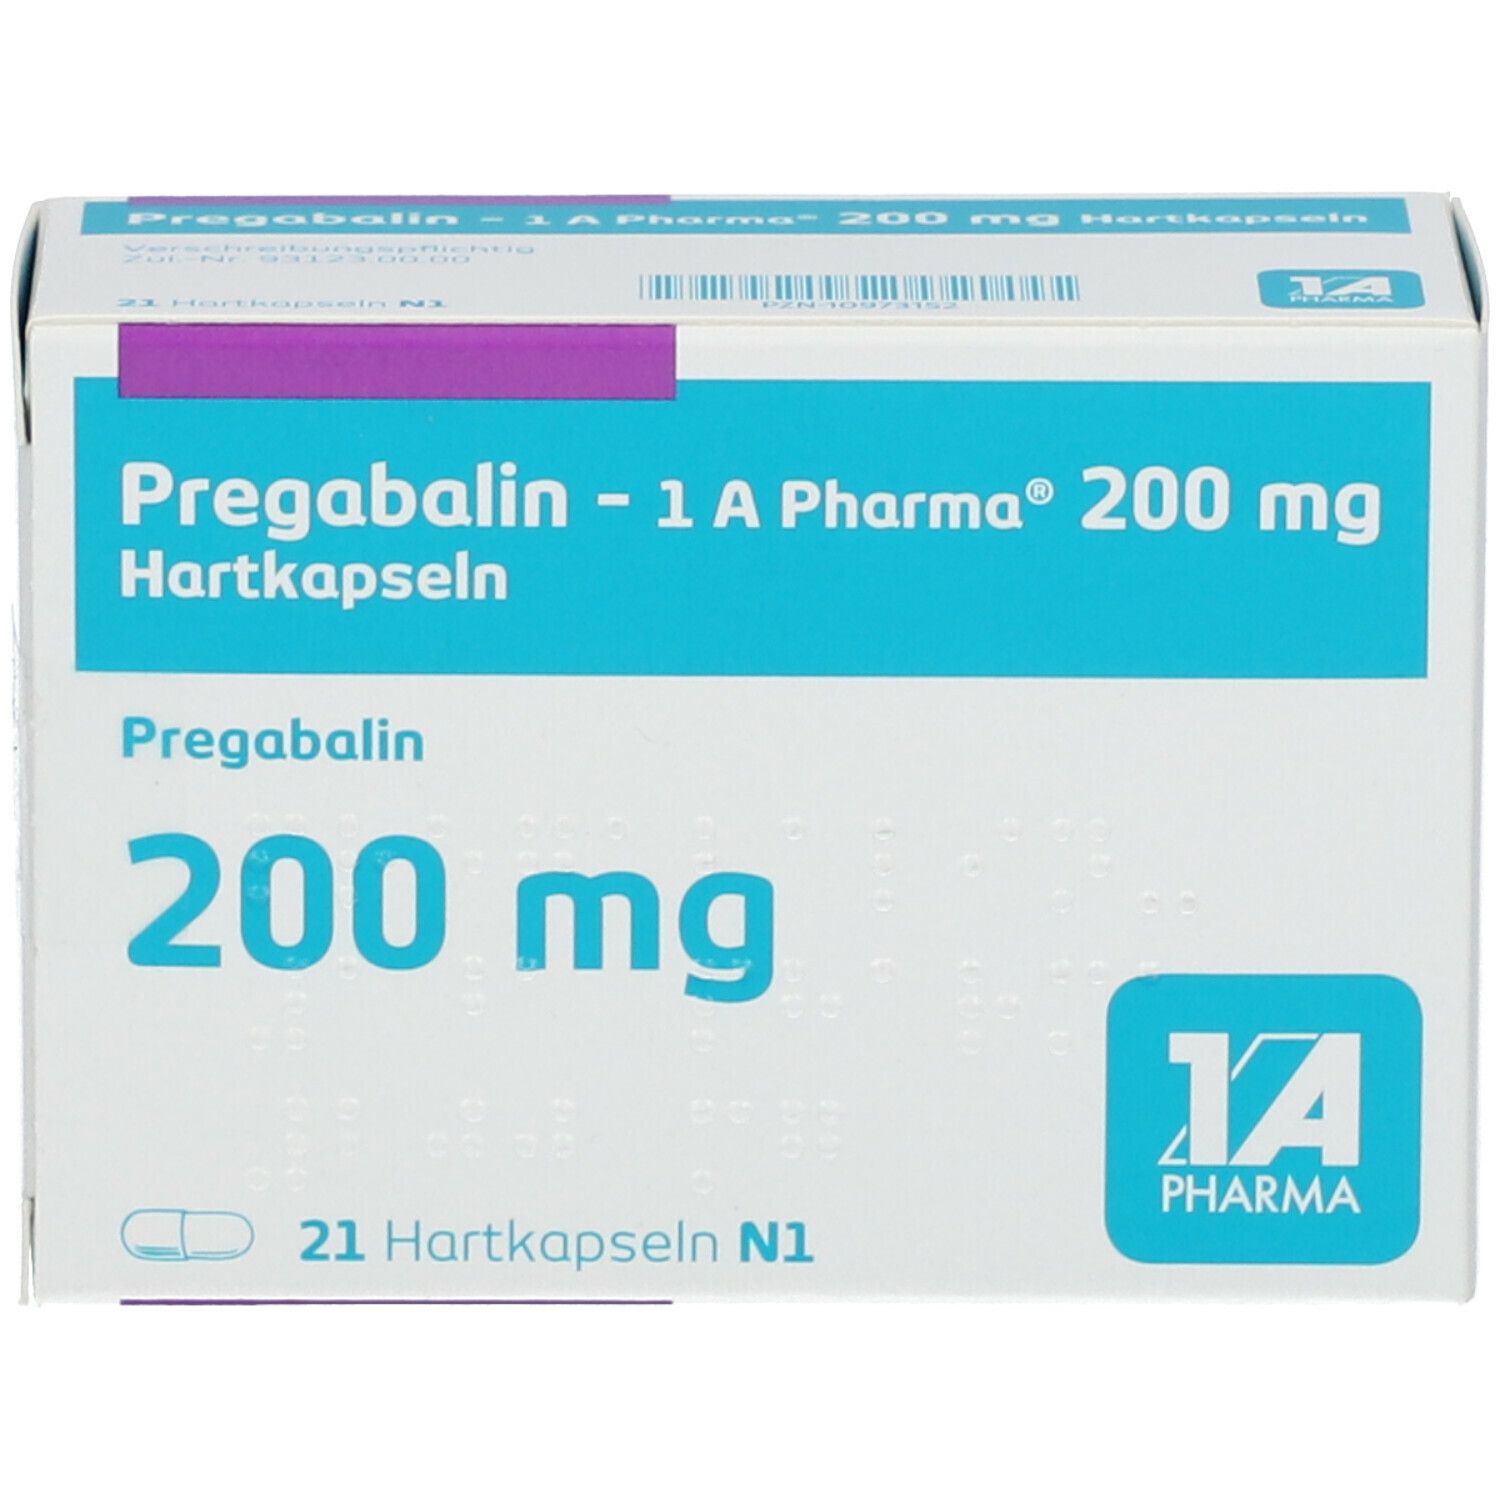 Pregabalin - 1 A Pharma® 200 mg